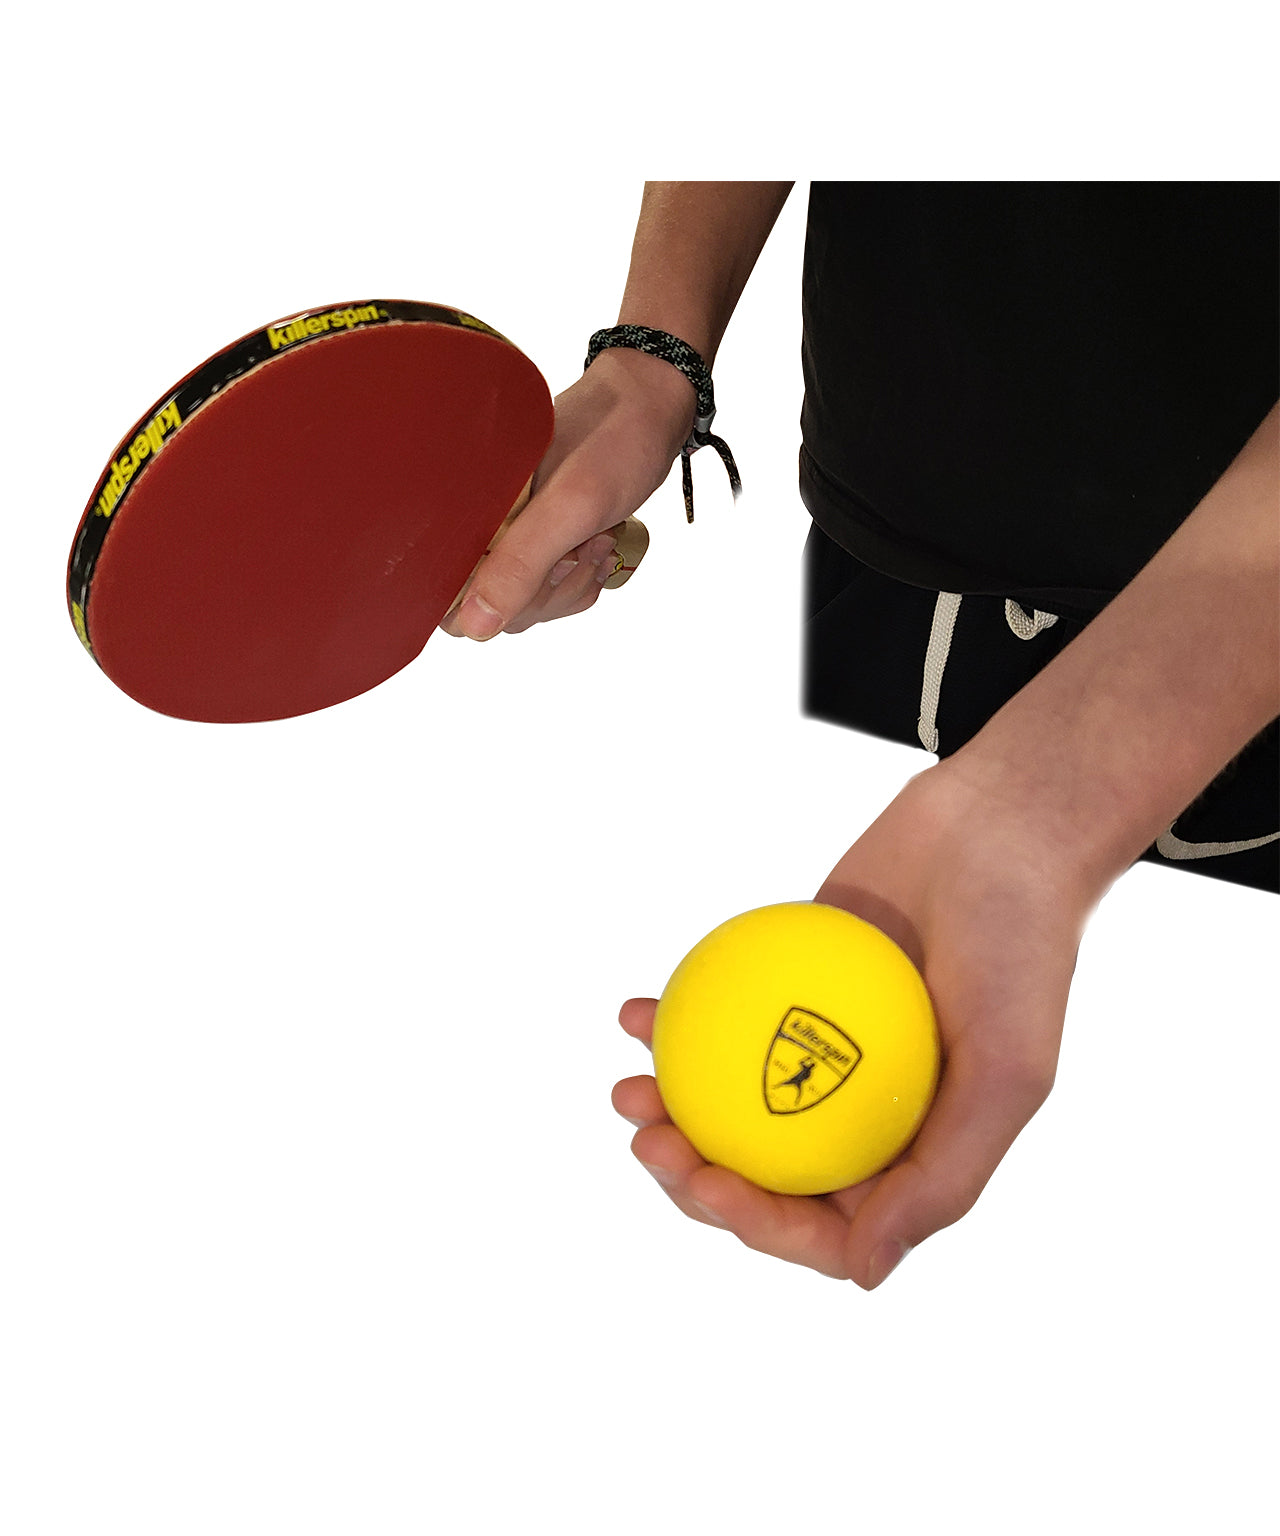 Zegenen Fotoelektrisch gallon Killerspin NoNoise Ping Pong Balls – Pack of 3 balls